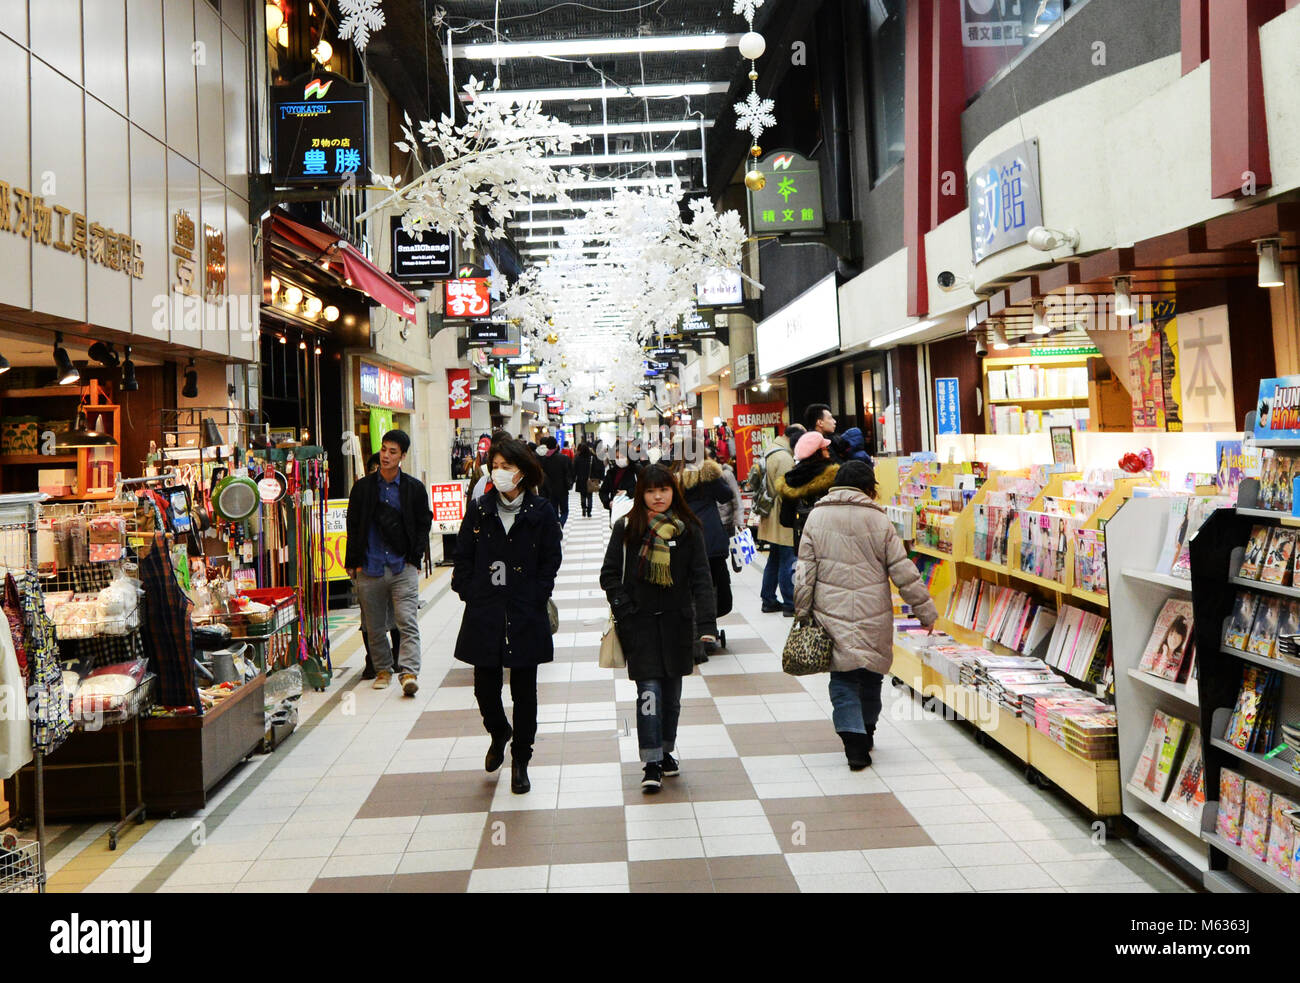 The busy commercial center in Tenjin, Fukuoka, Japan. Stock Photo